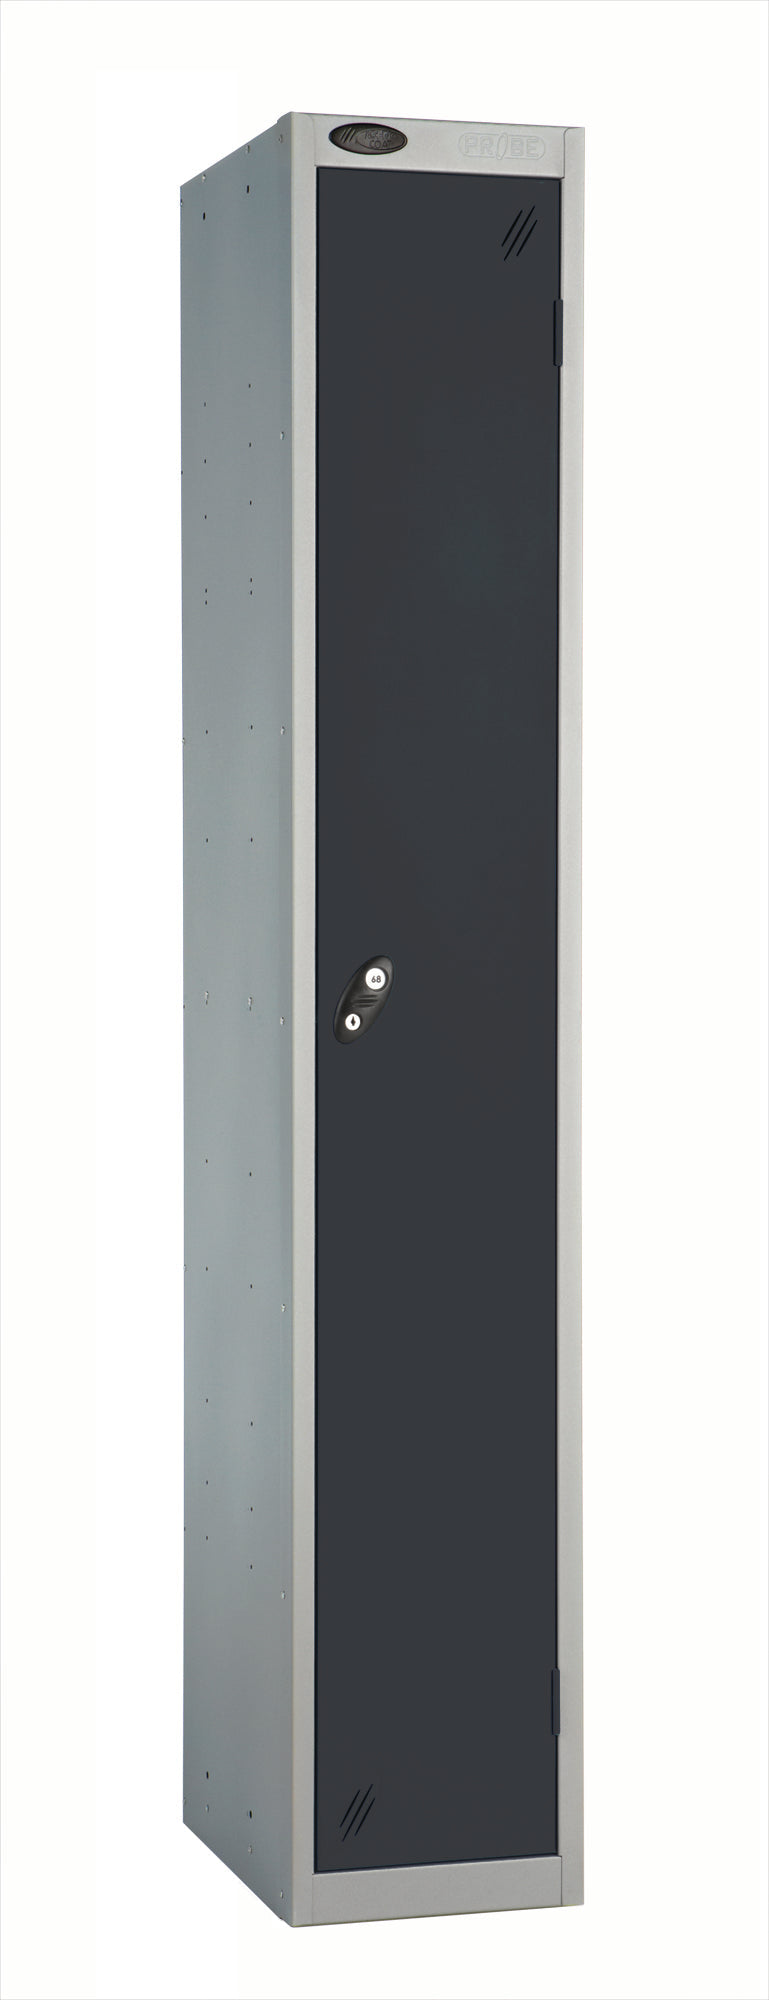 PROBEBOX STANDARD 1 NEST STEEL LOCKERS - JET BLACK 1 DOOR Storage Lockers > Lockers > Cabinets > Storage > Probe > One Stop For Safety   